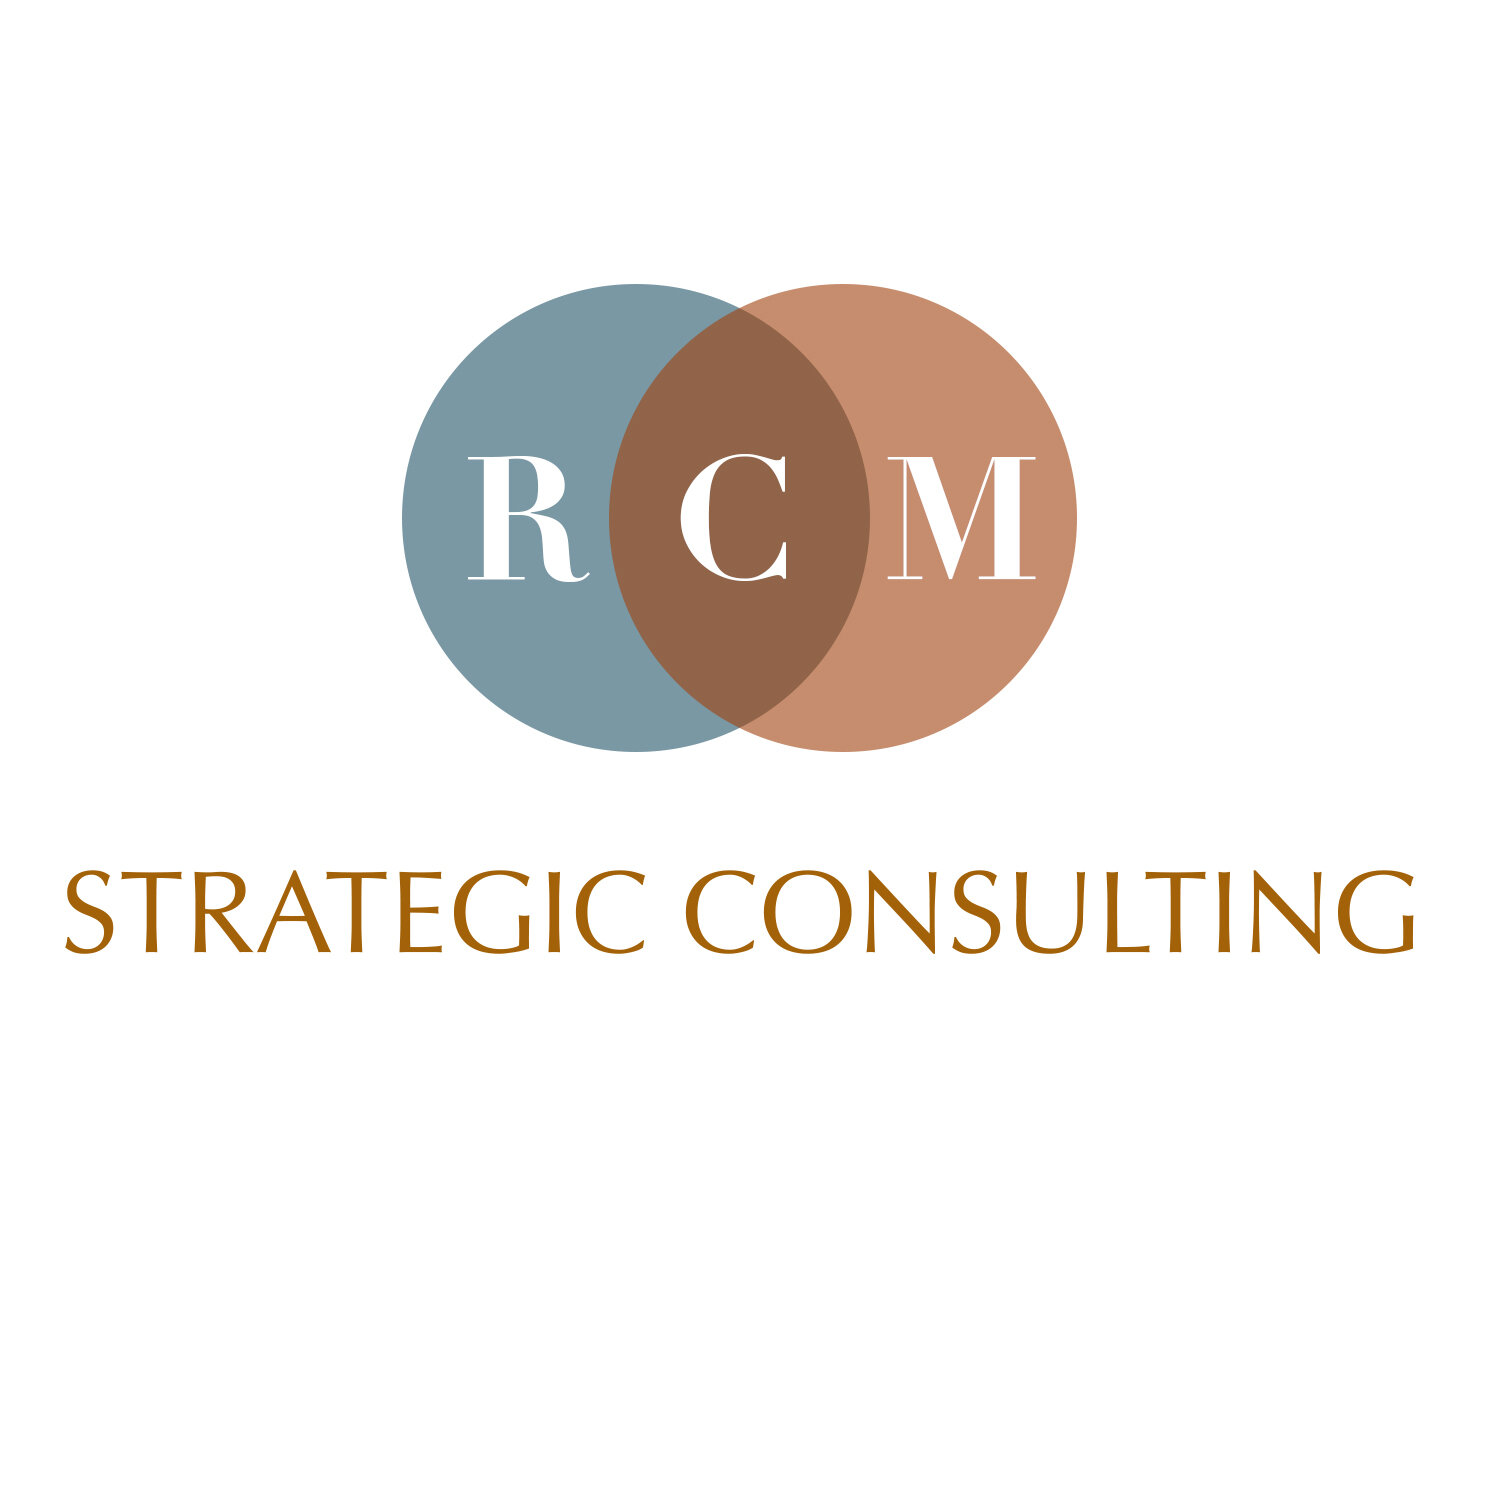 RCM logo final SOCIAL.jpg